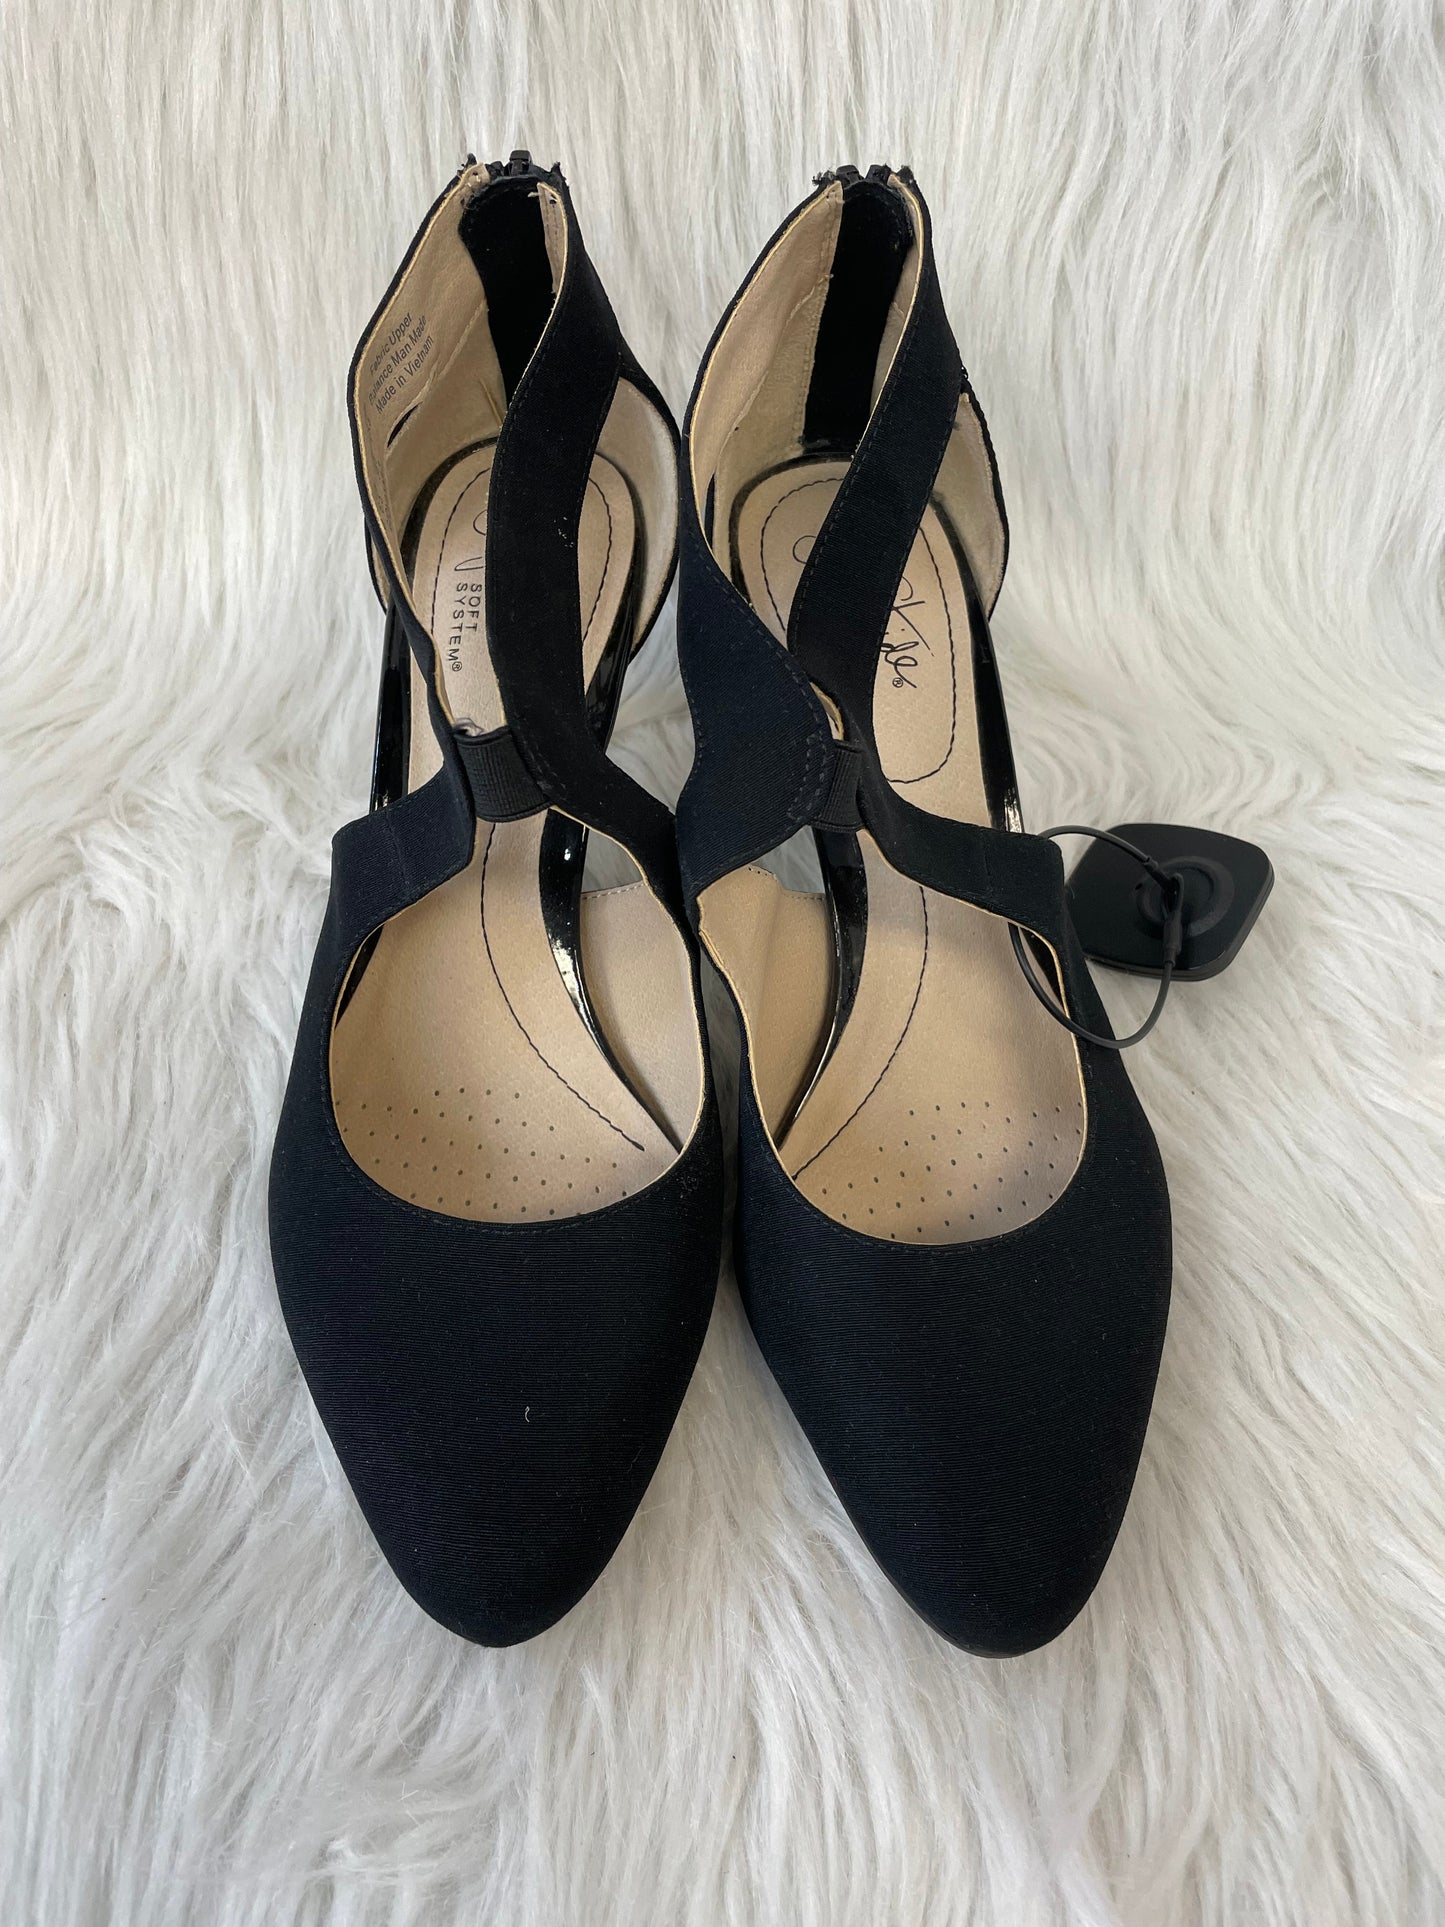 Black Shoes Heels Block Life Stride, Size 8.5